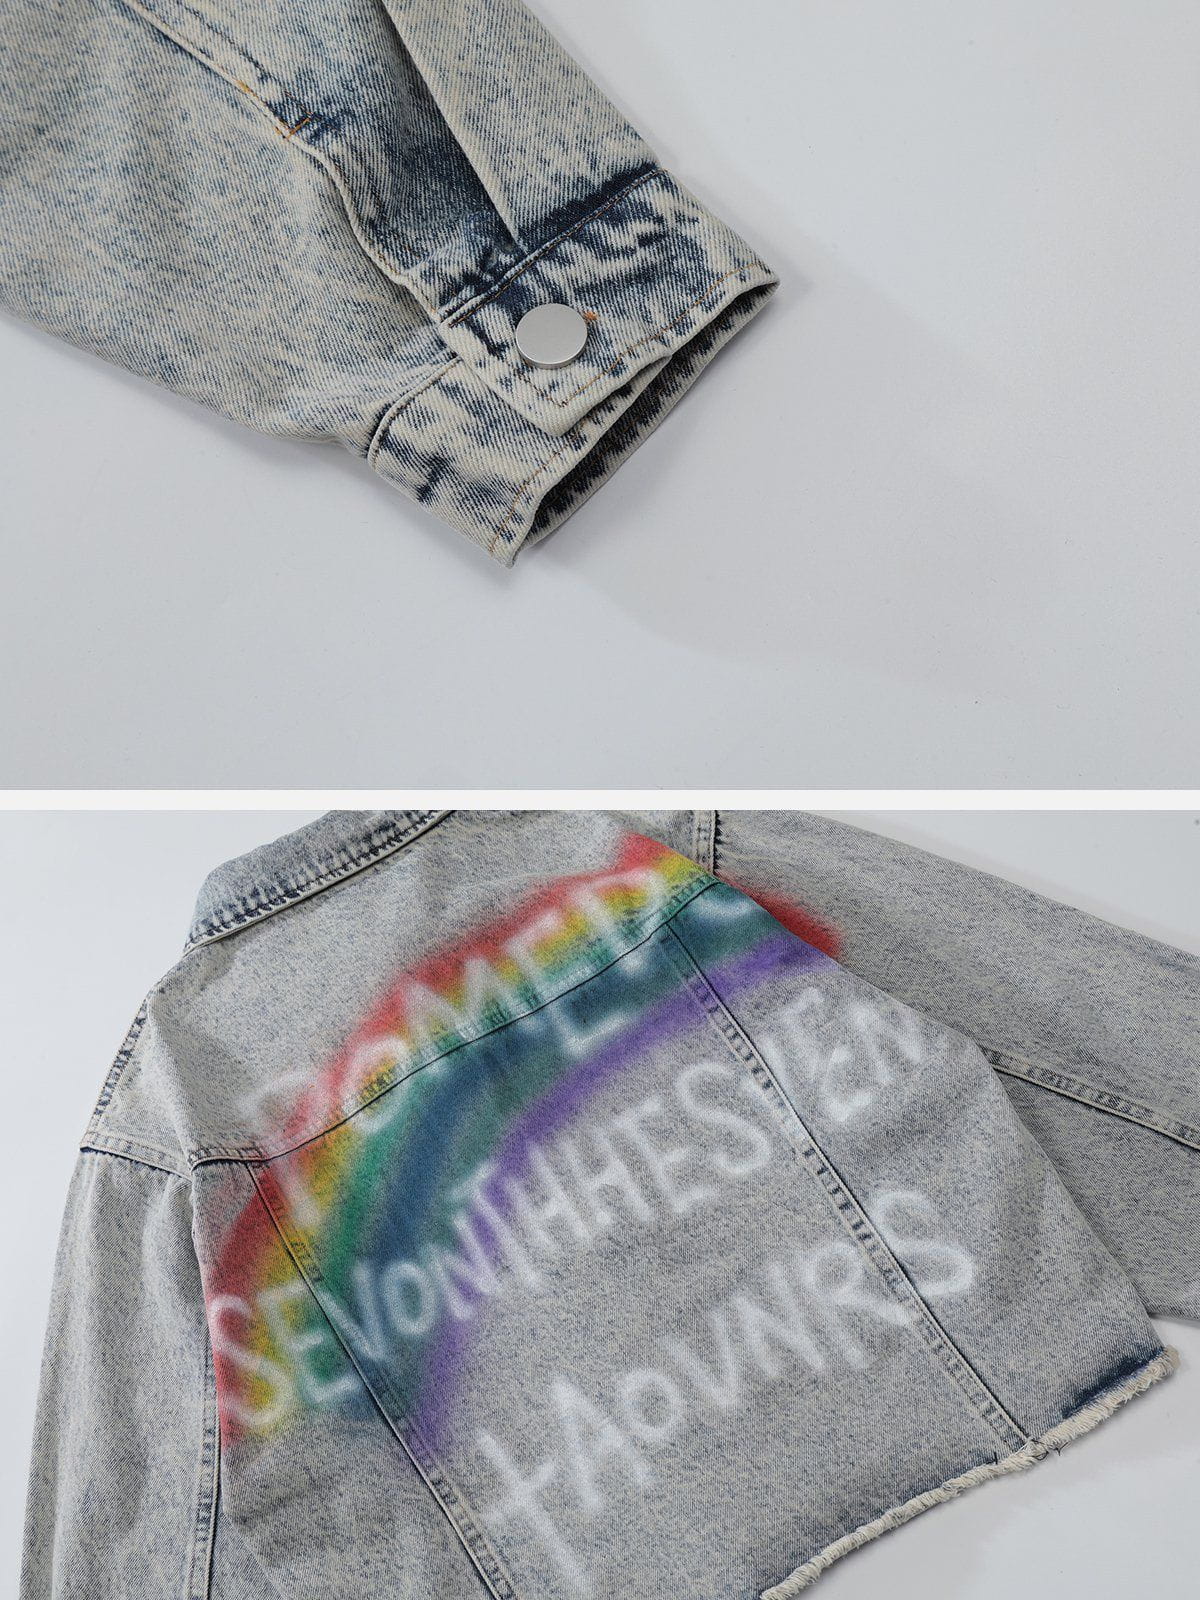 Majesda® - Rainbow Letter Print Denim Jacket outfit ideas, streetwear fashion - majesda.com